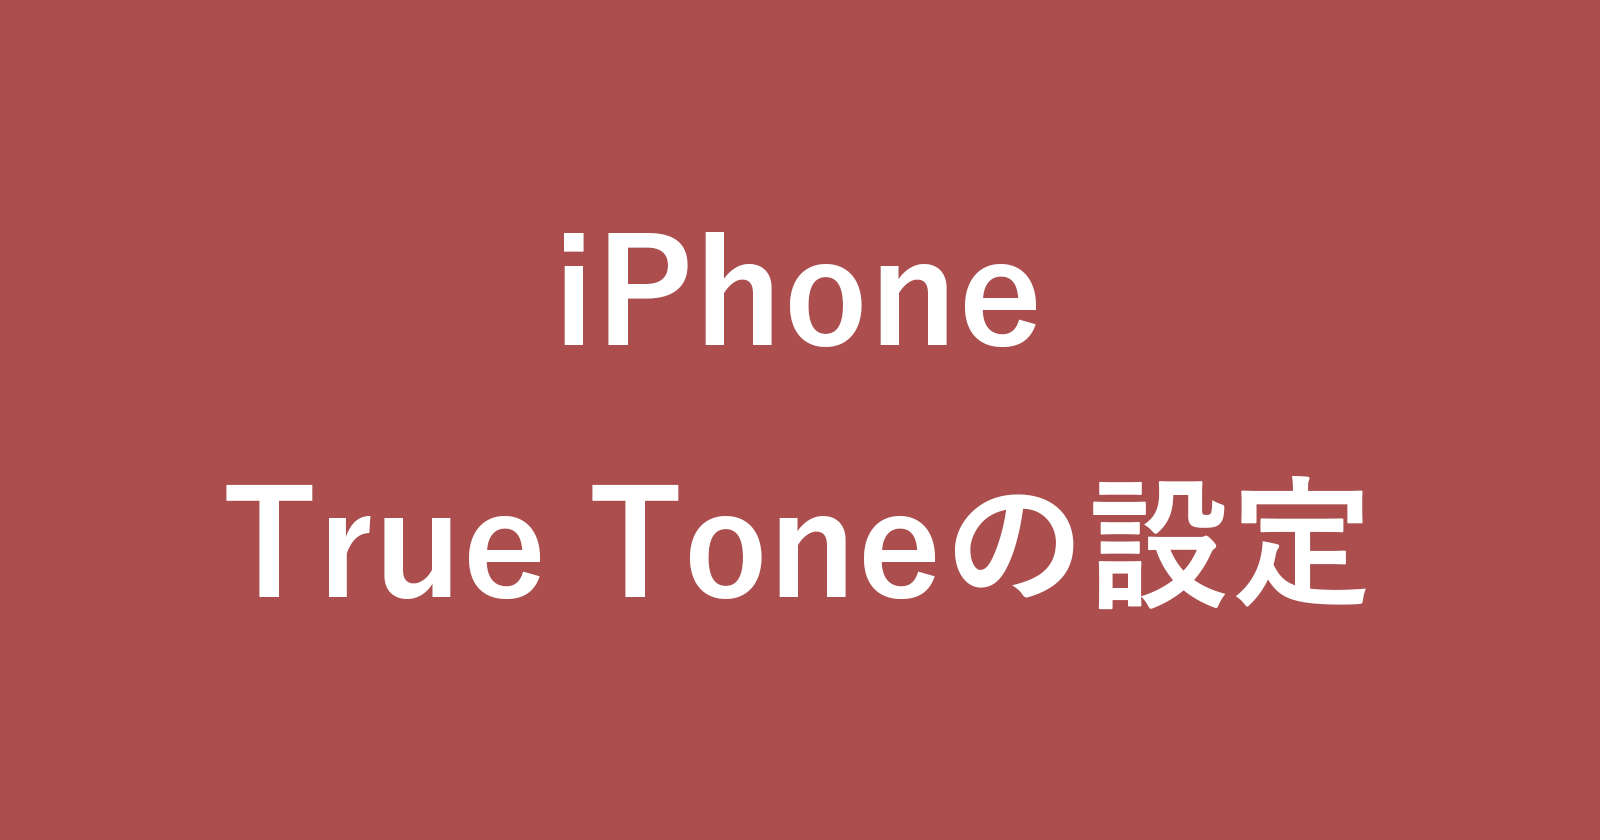 iphone true tone